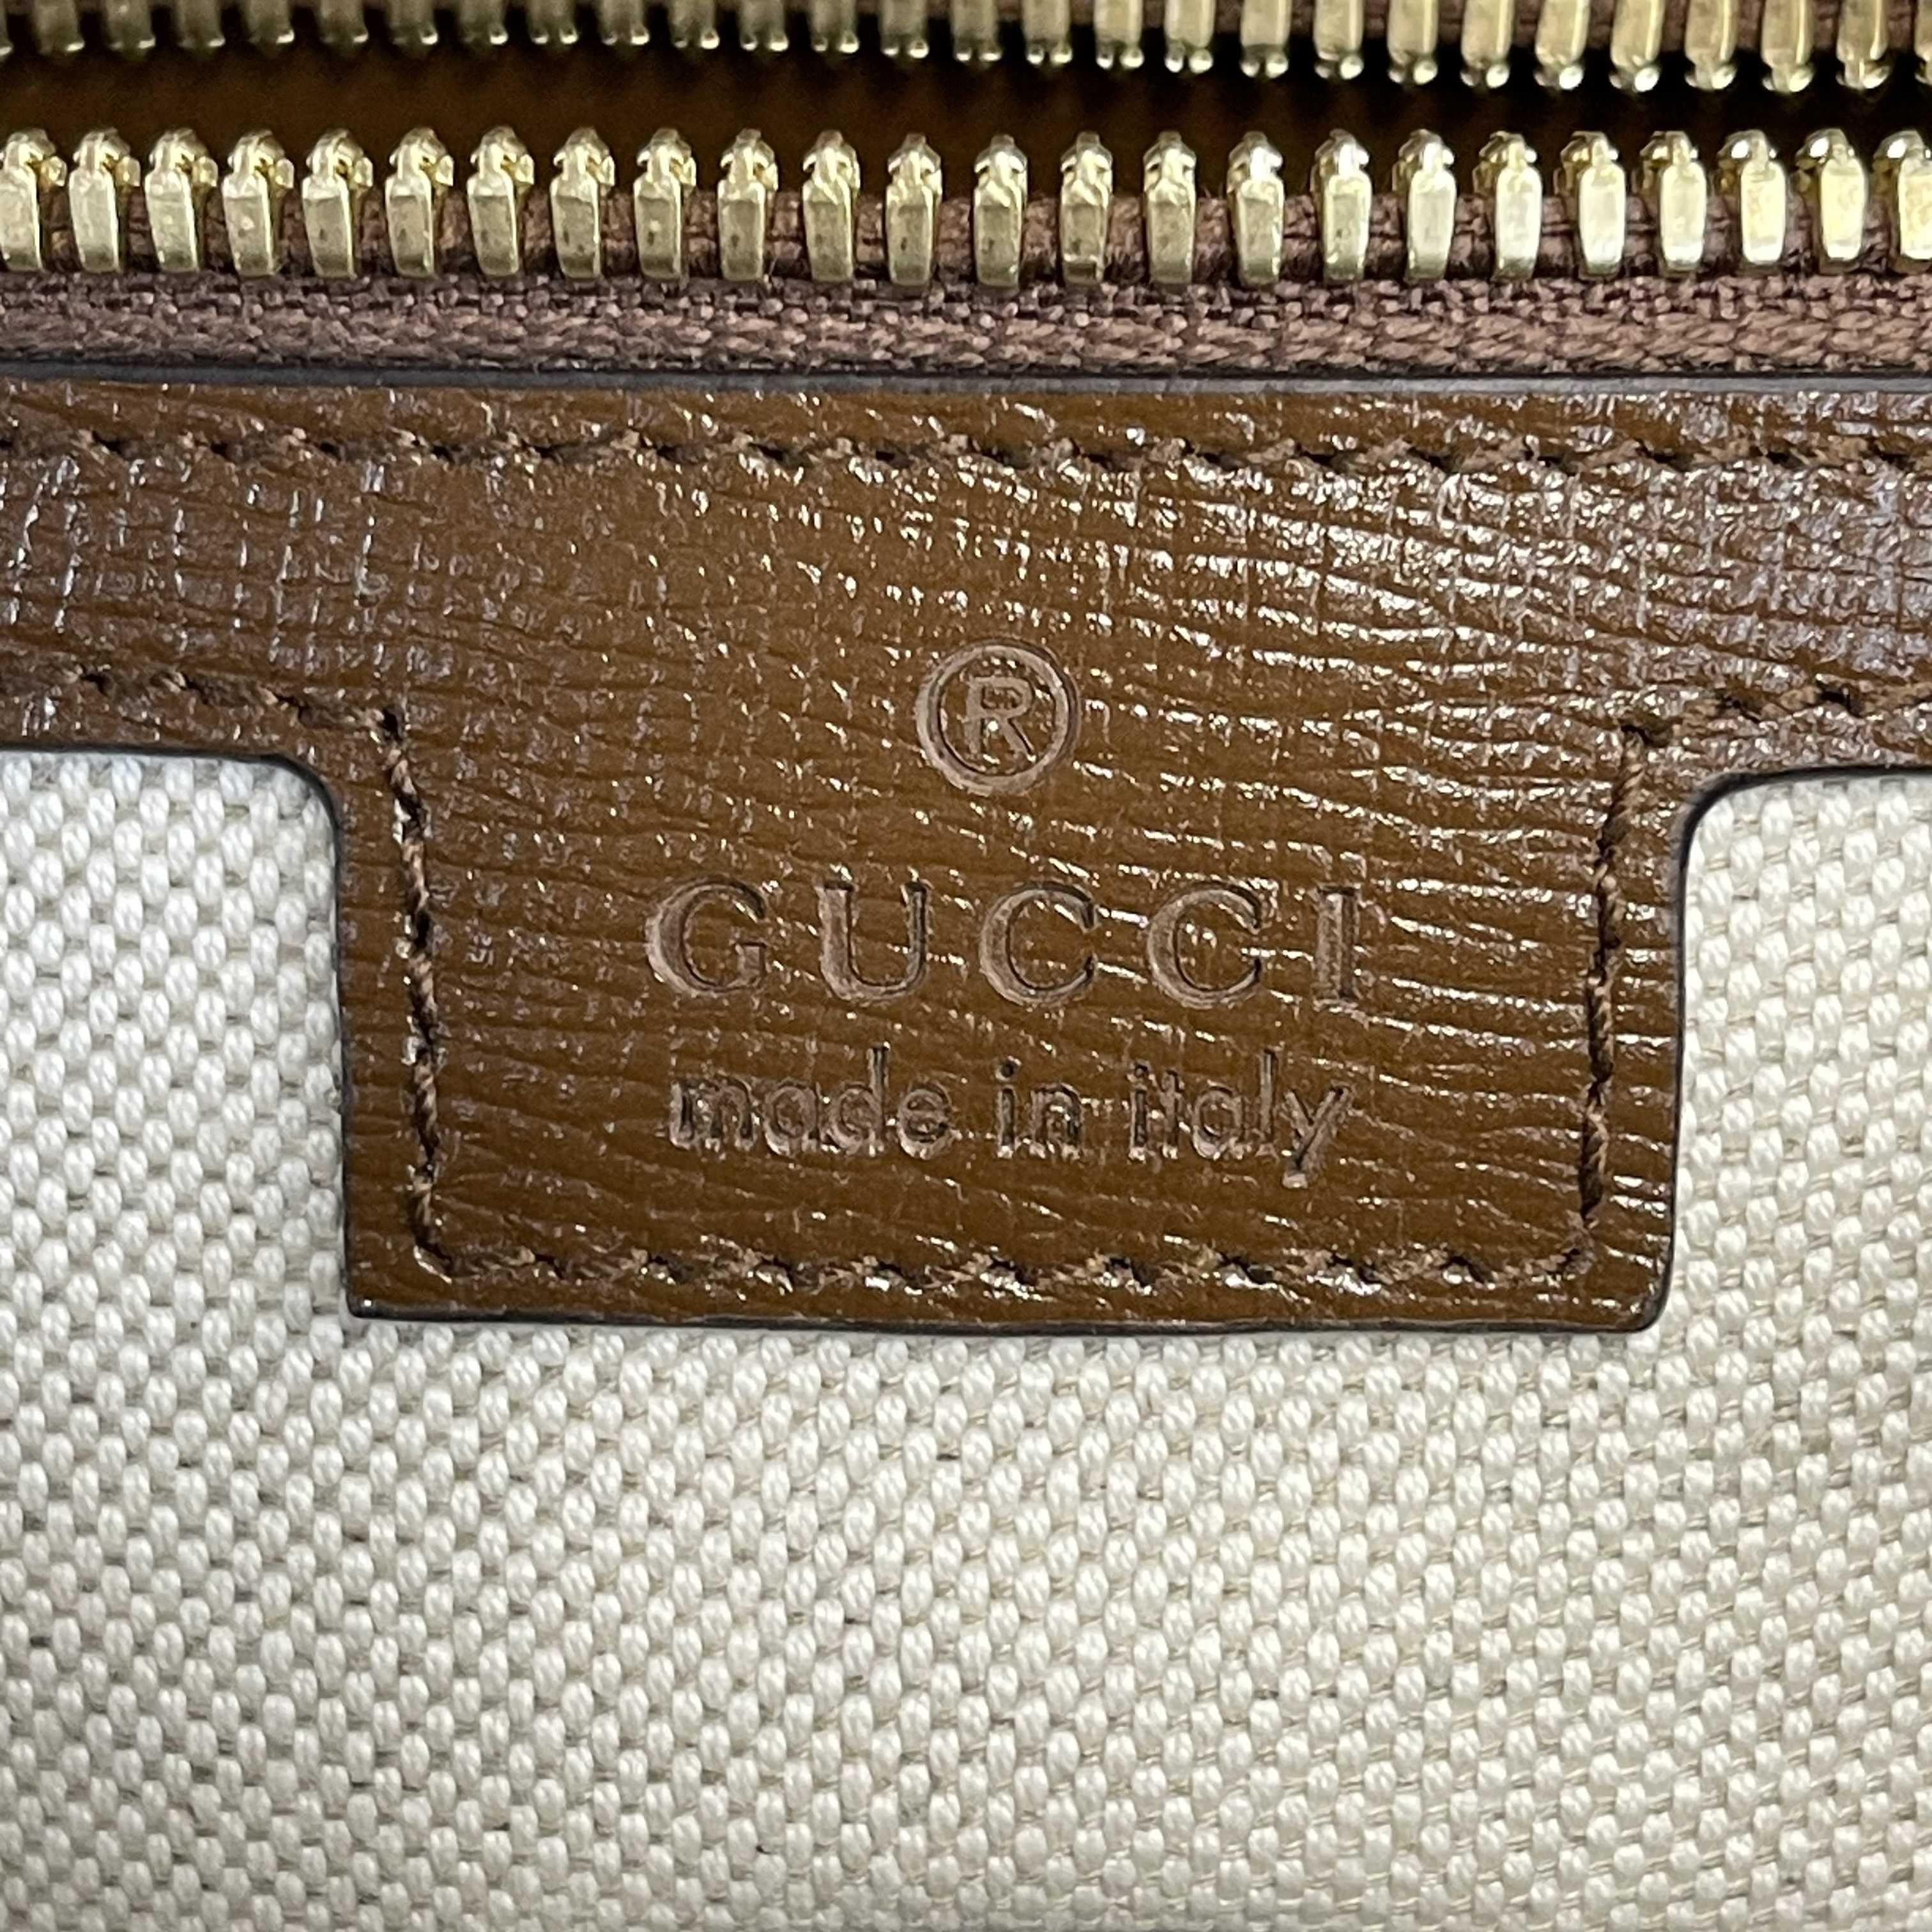 Gucci - NEW Backpack With Interlocking G - Beige / Brown Monogram Backpack 7